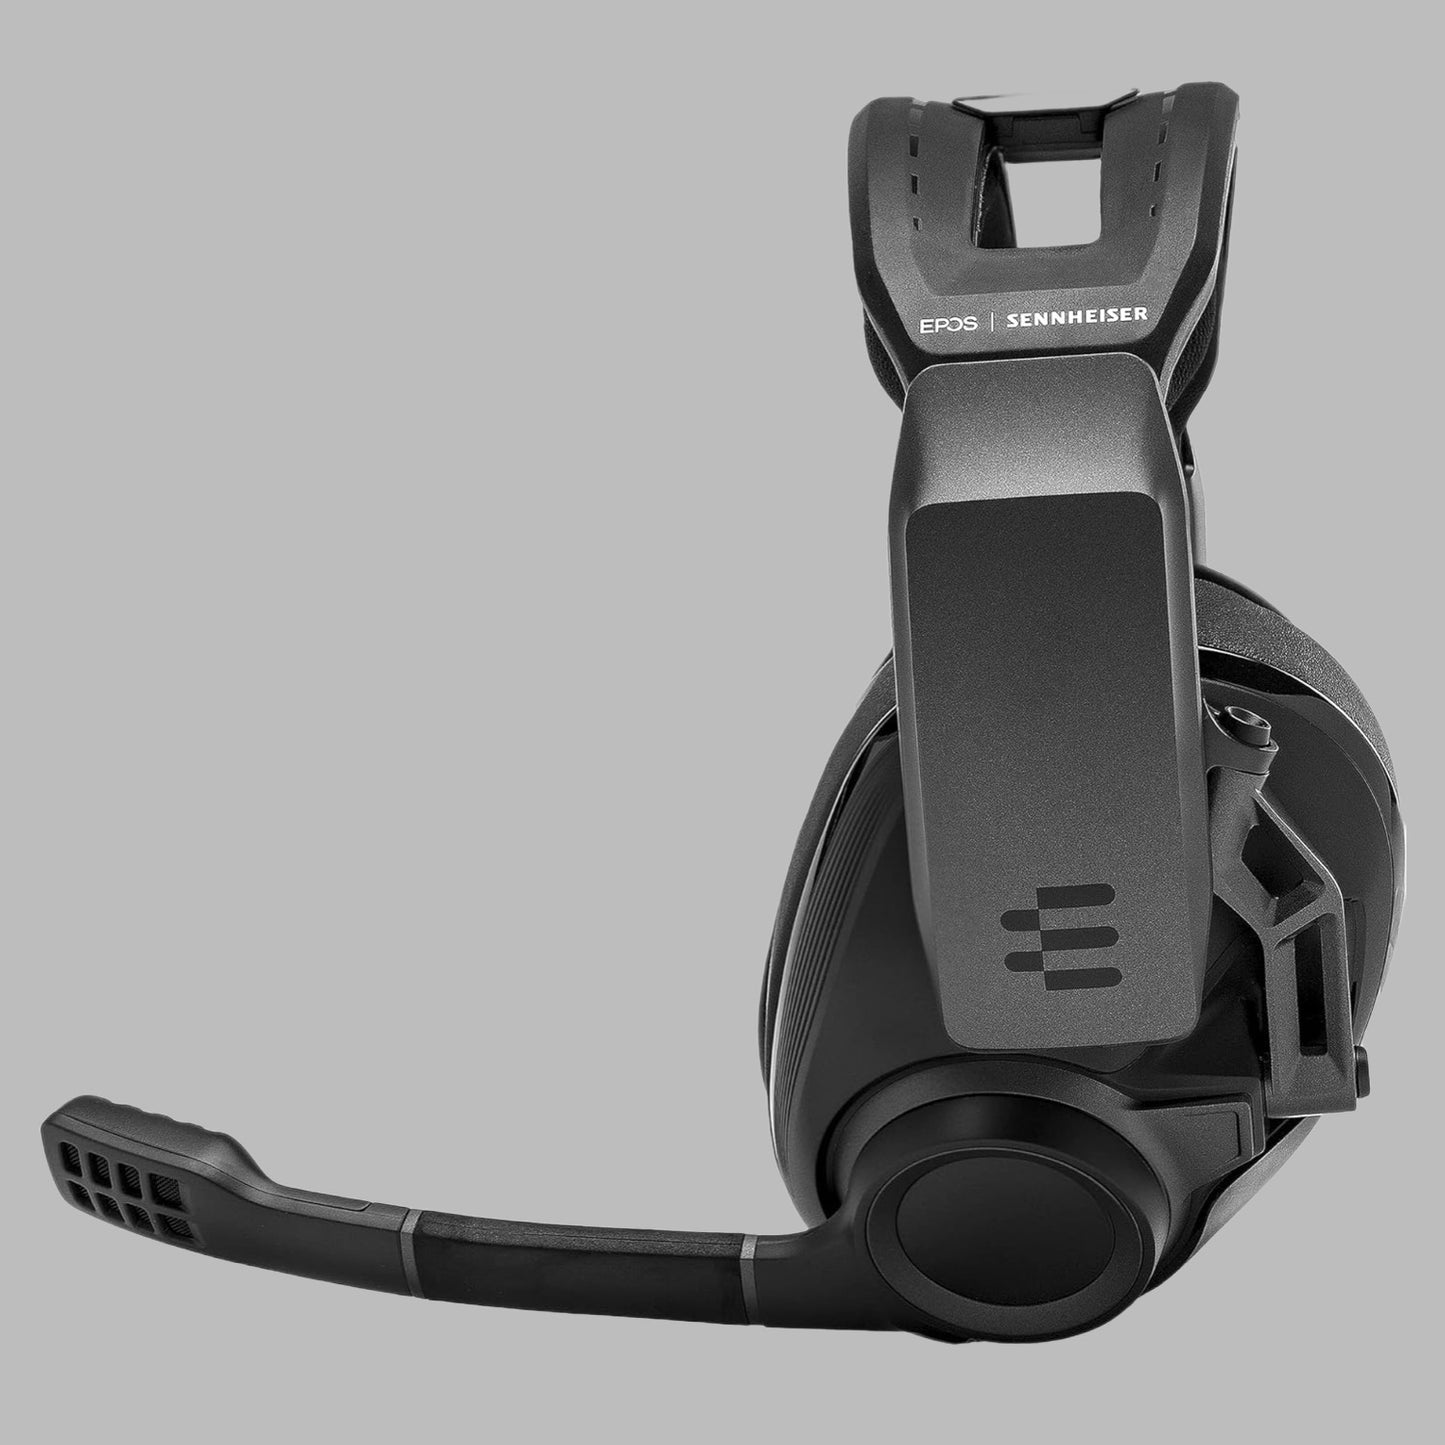 EPOS SENNHEISER GSP 670 Wireless Gaming Headset Bluetooth Low-Latency, 20 HR BAT